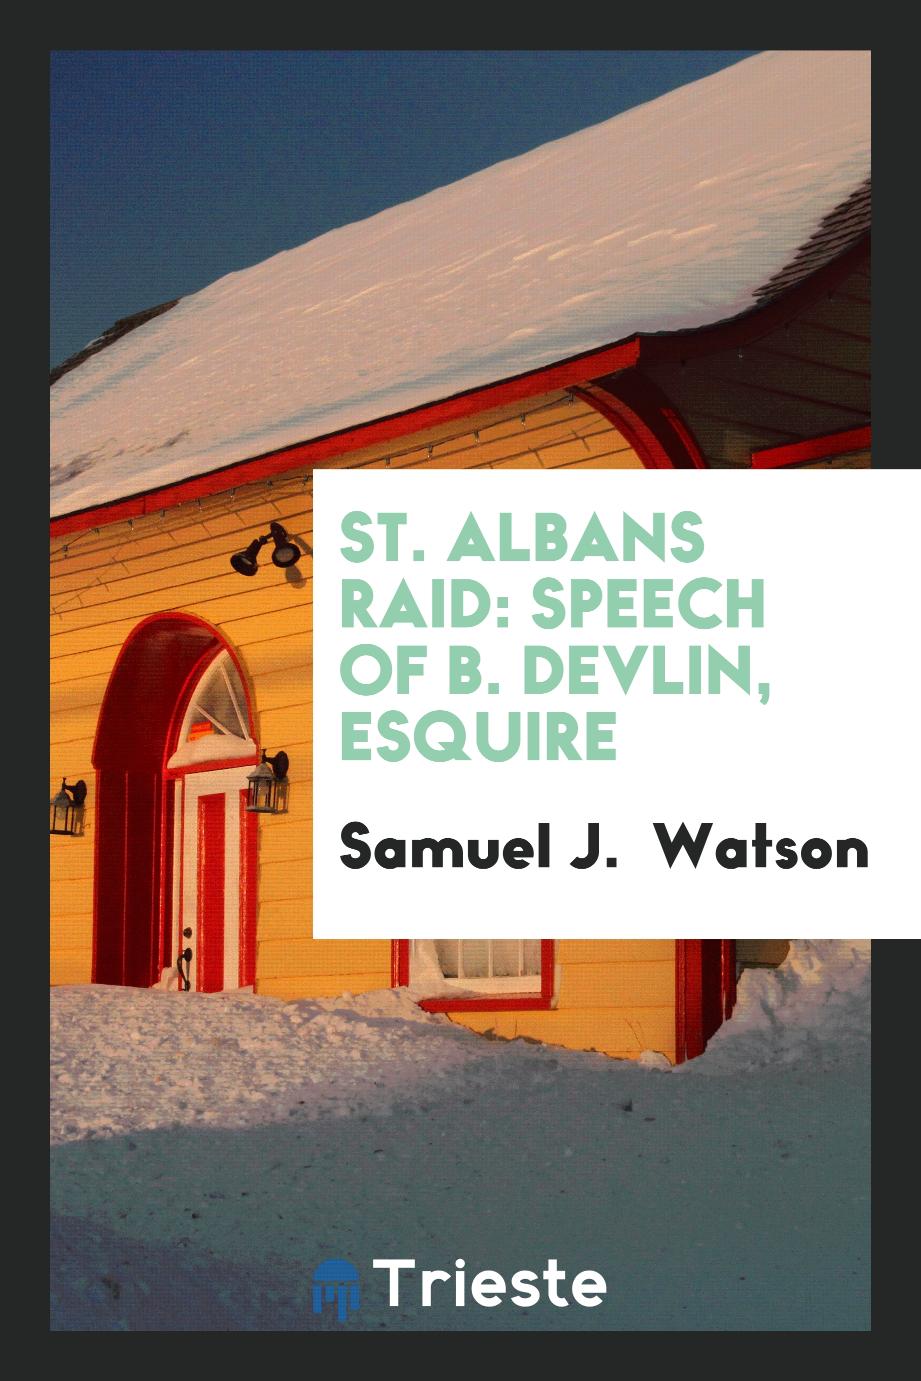 St. Albans Raid: Speech of B. Devlin, Esquire